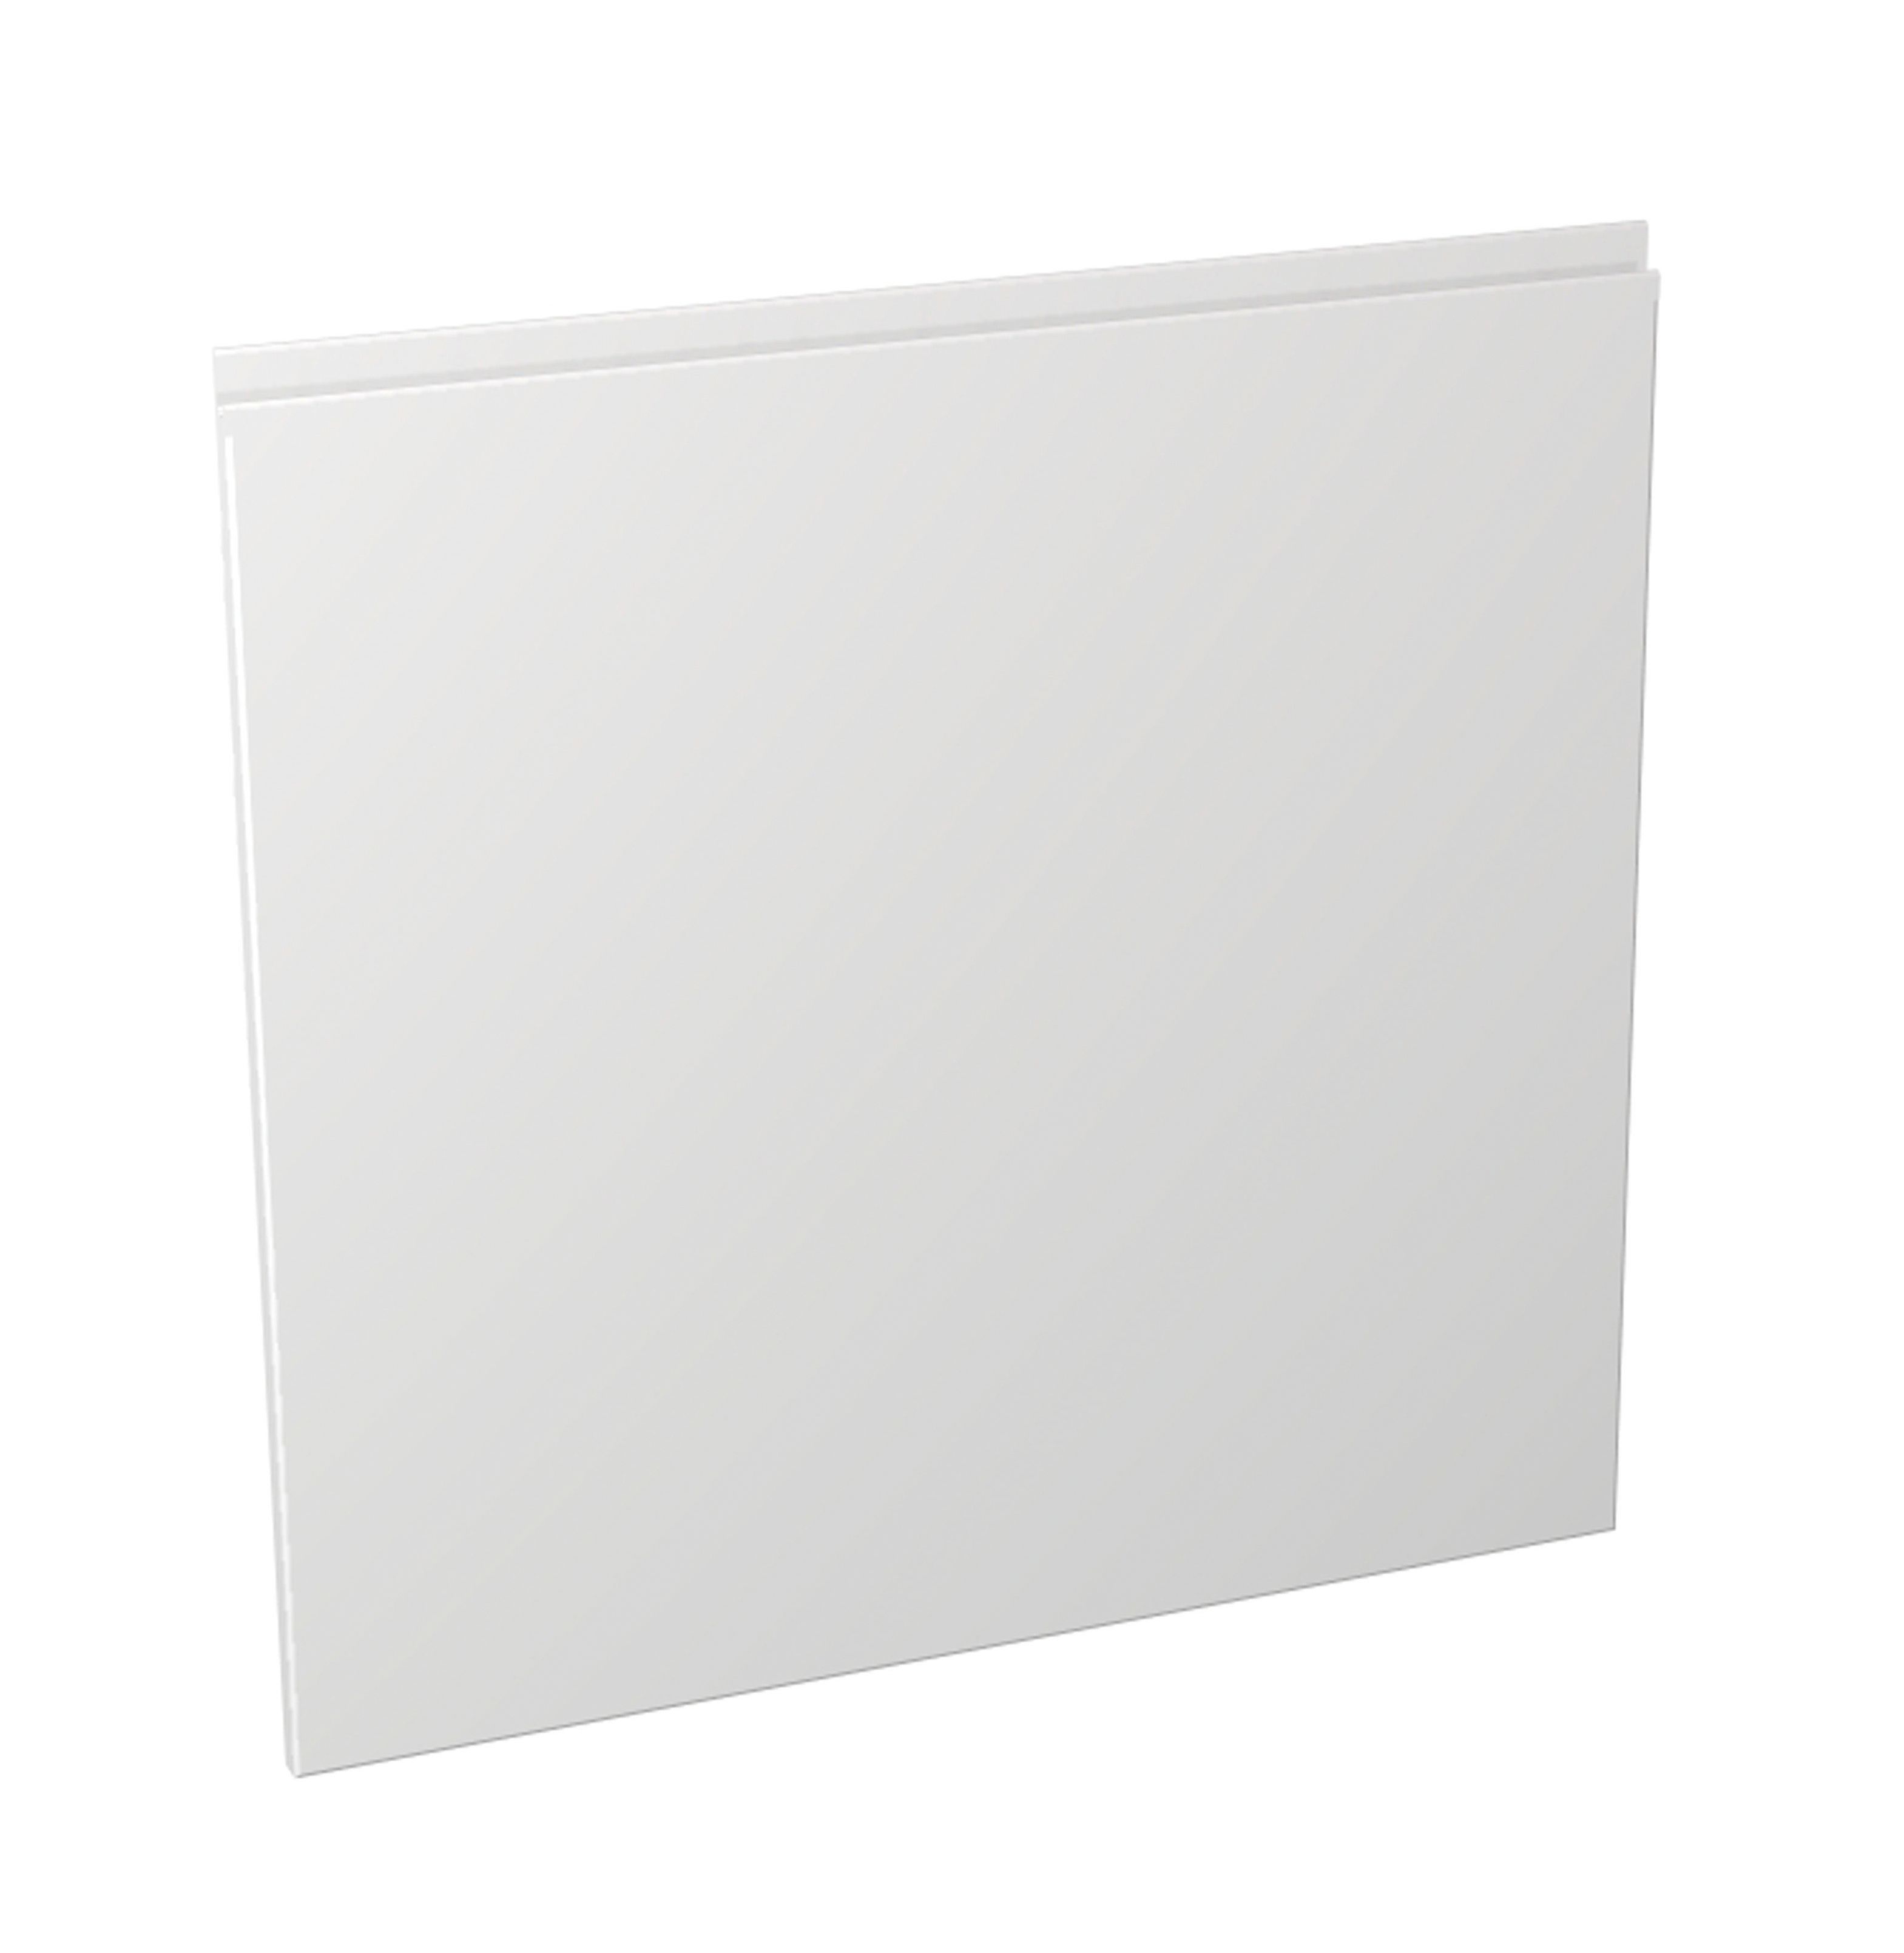 Image of Wickes Madison White Gloss Handleless Appliance Door (C) - 600 x 584mm